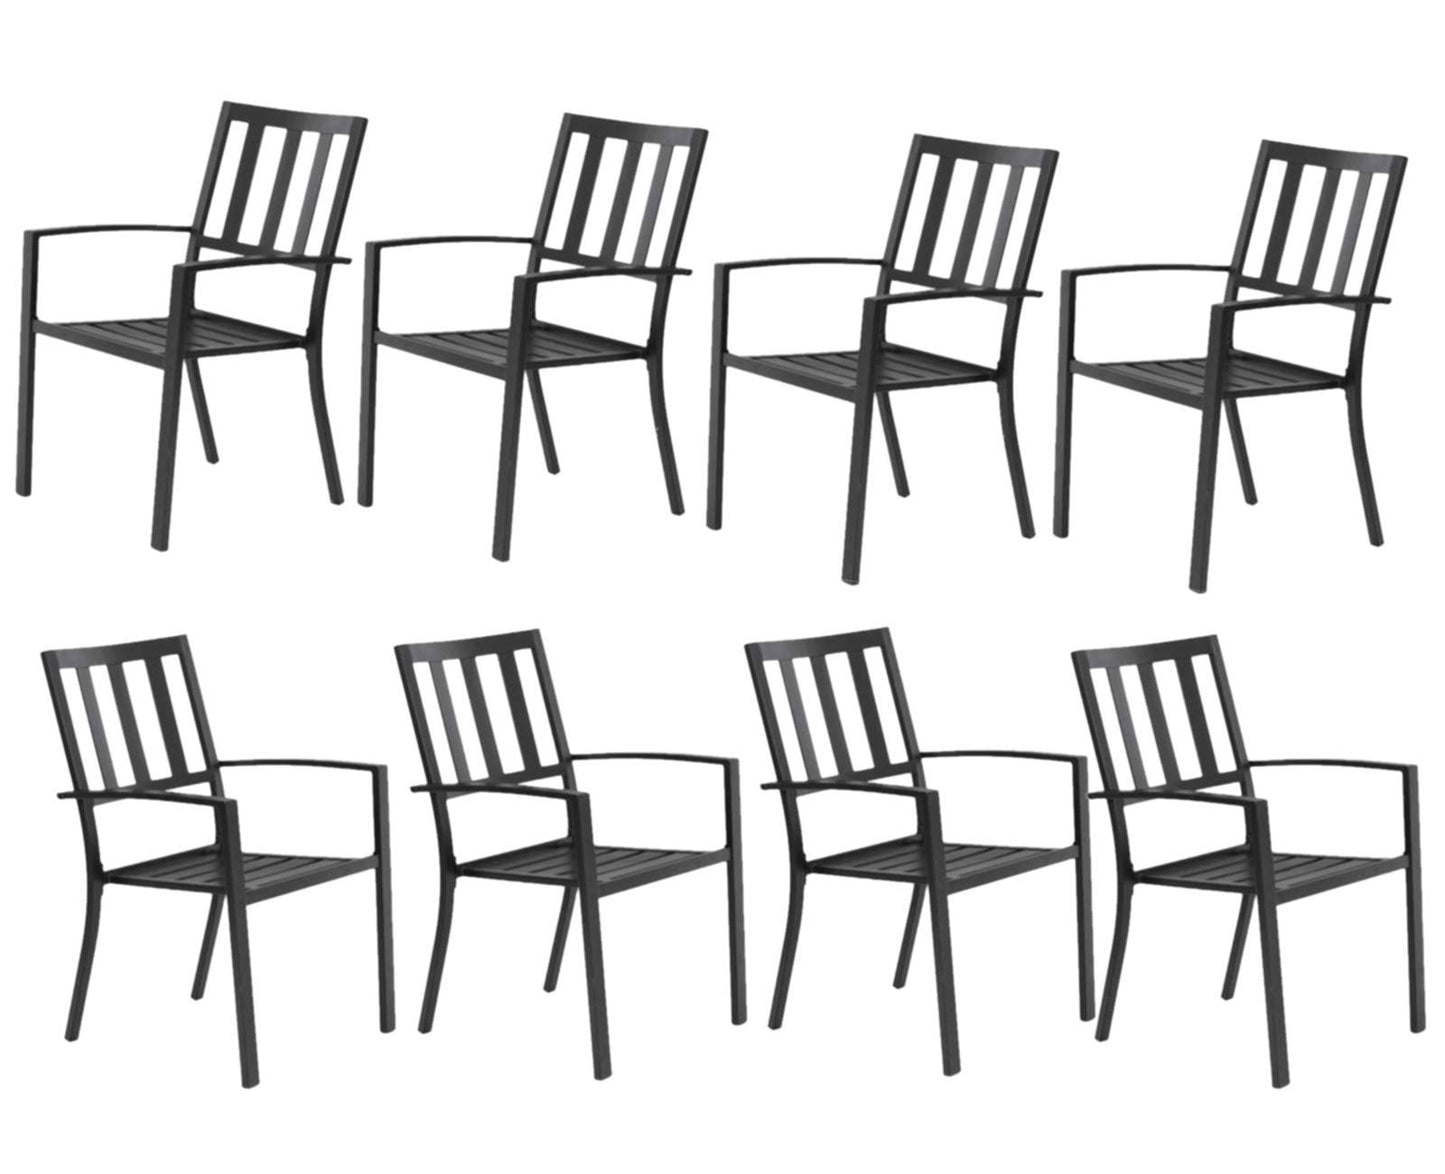 Sophia & William Outdoor Patio Metal Dining Chairs Set of 8, Black